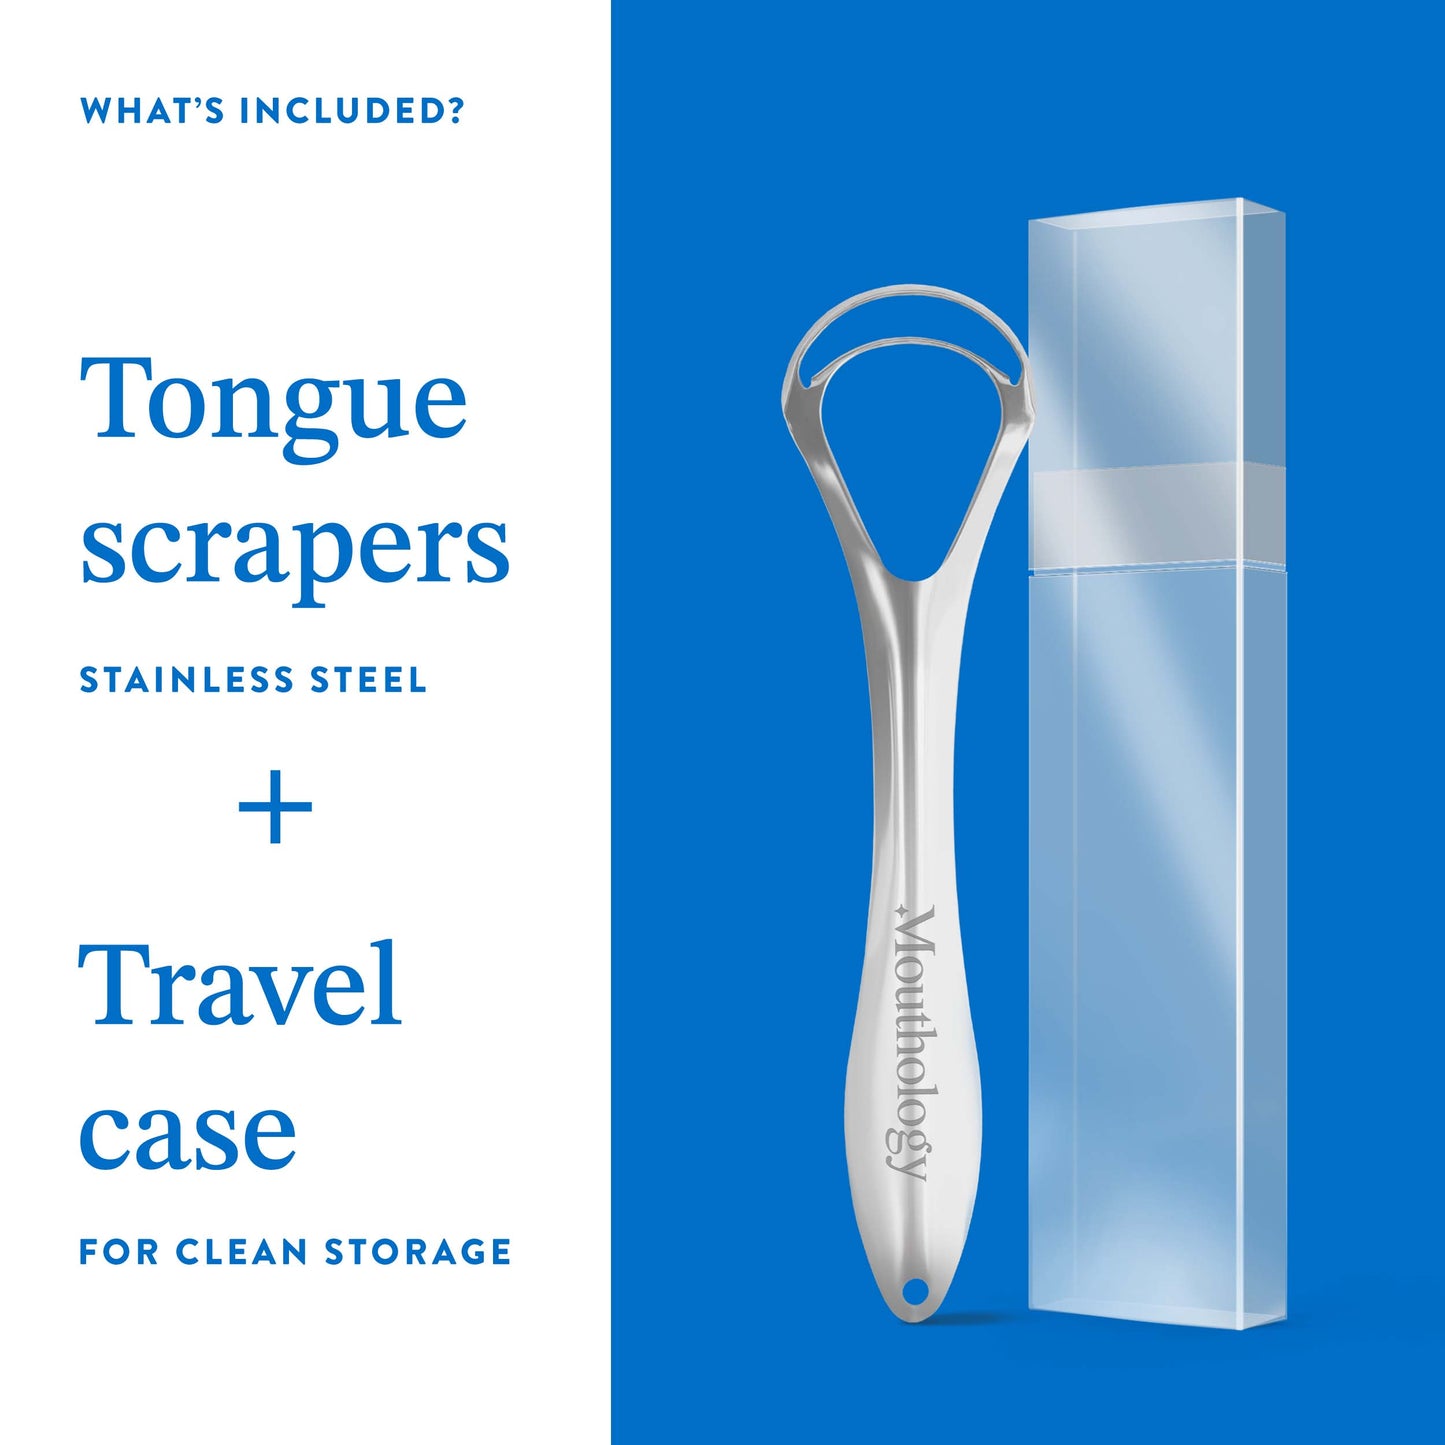 Single Handle Tongue Scraper 1 Pack